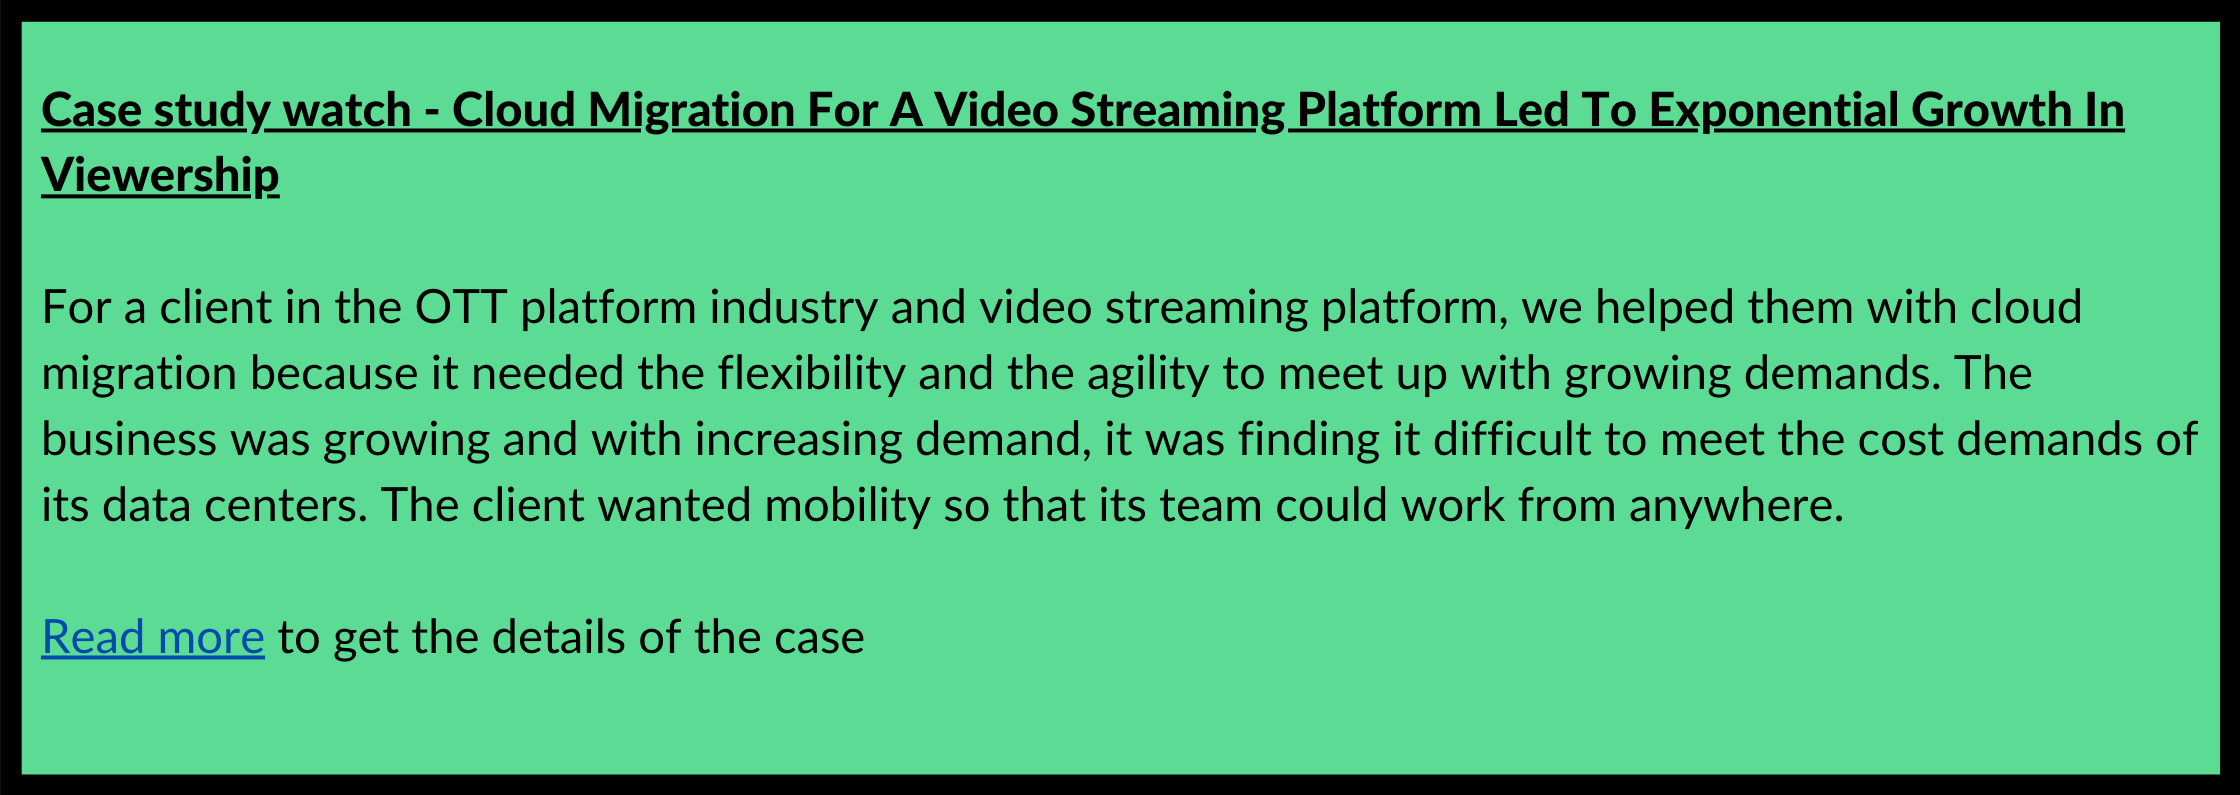 Cloud Migration For A Video Streaming Platform